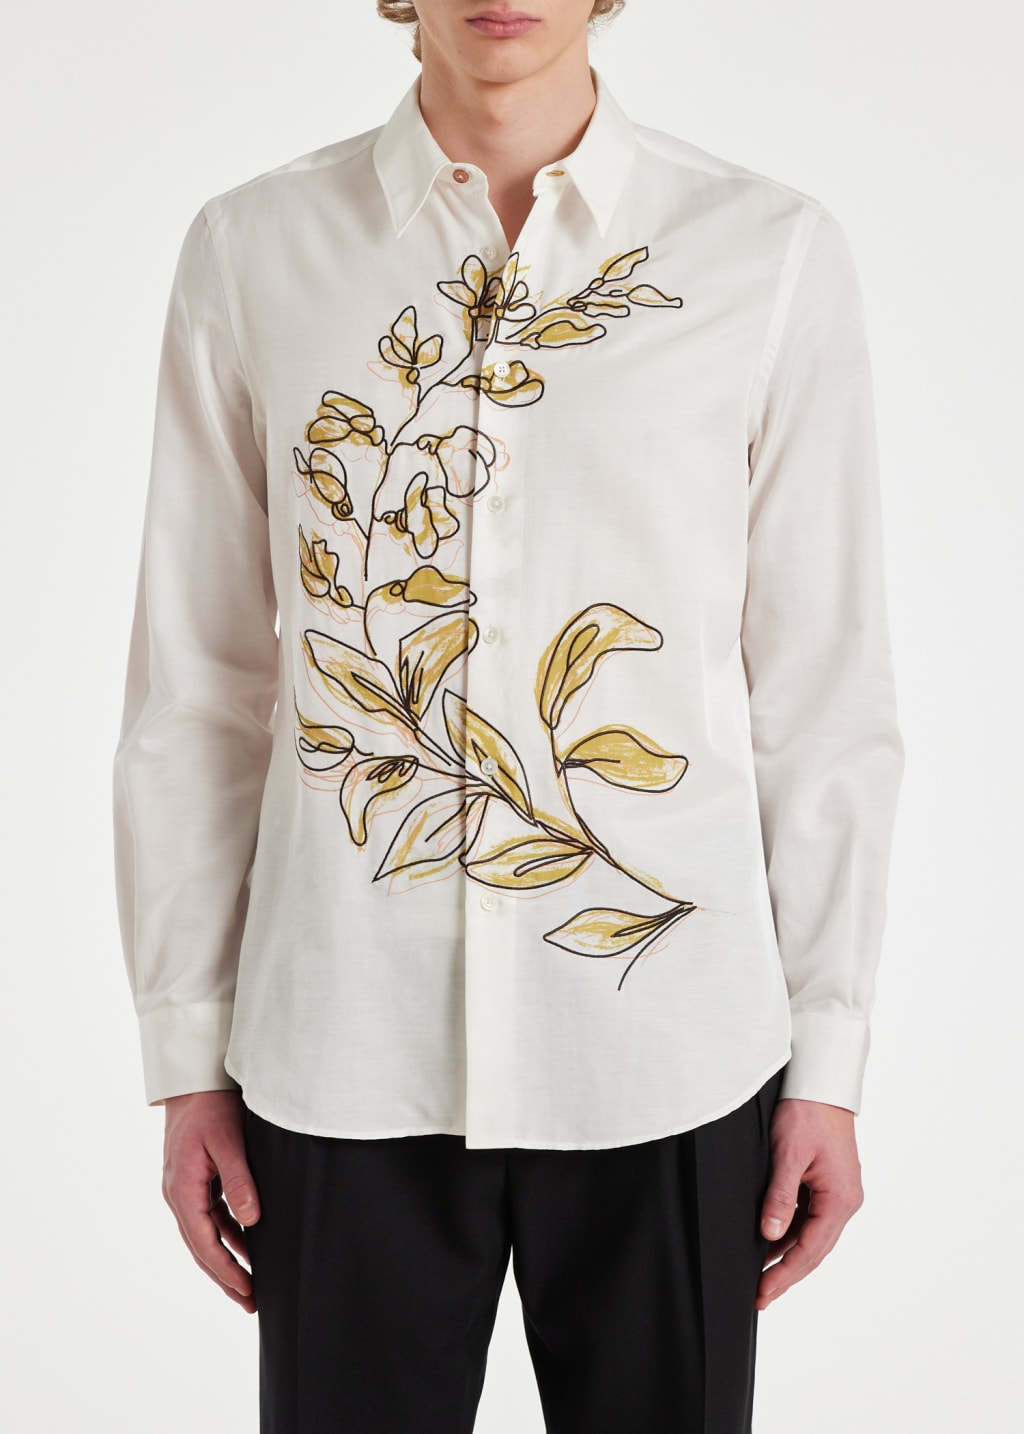 Model View - Ecru Embroidered 'Laurel' Cotton-Blend Shirt Paul Smith